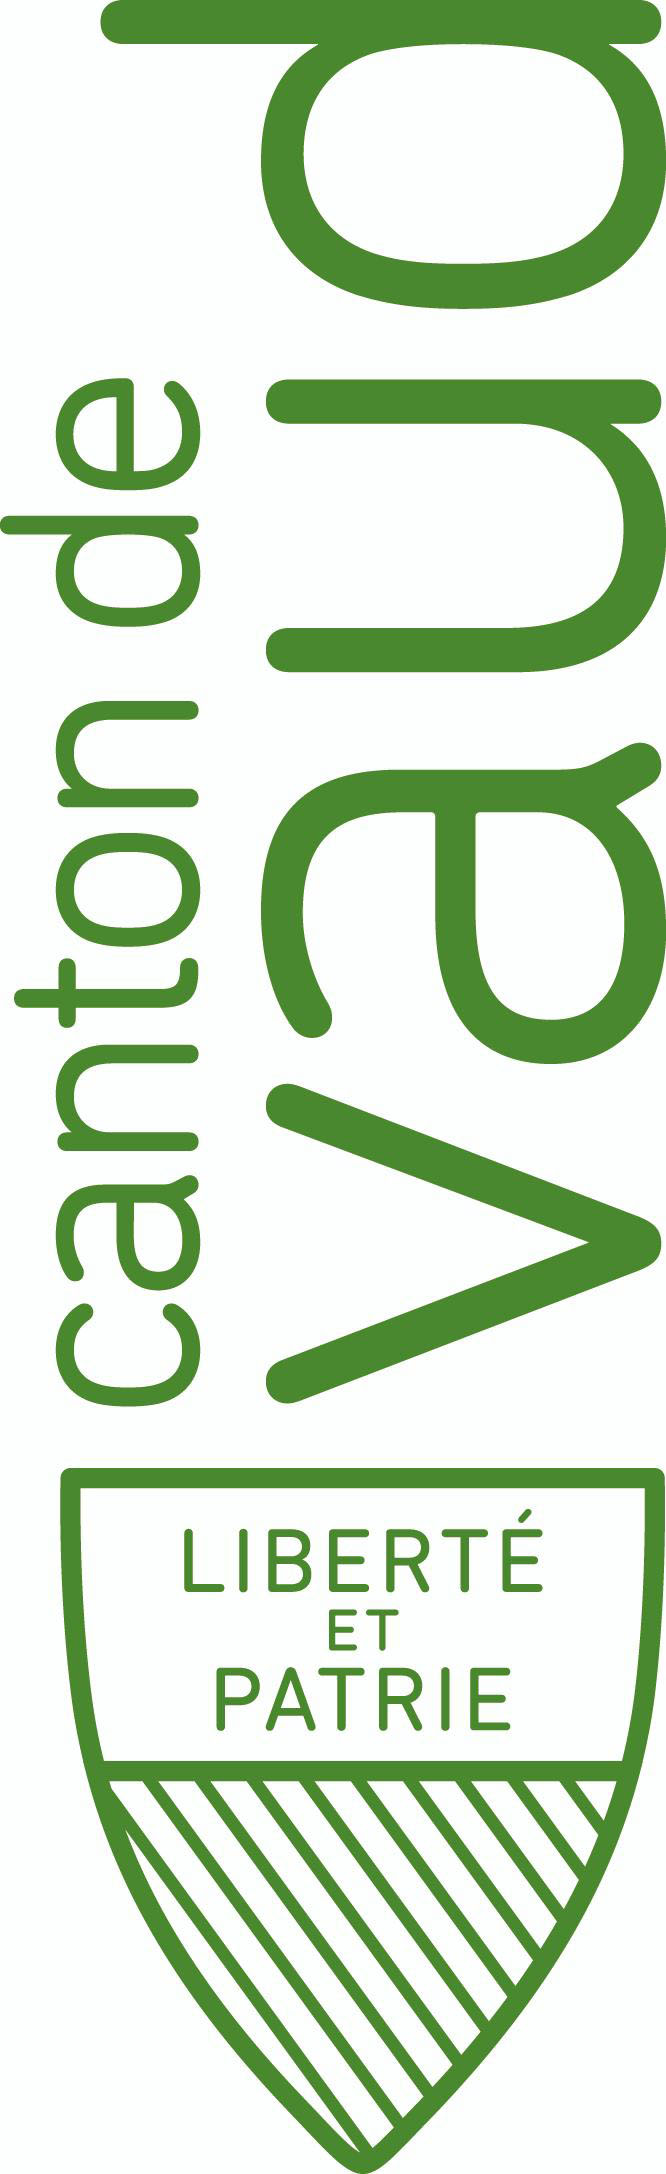 vd logo